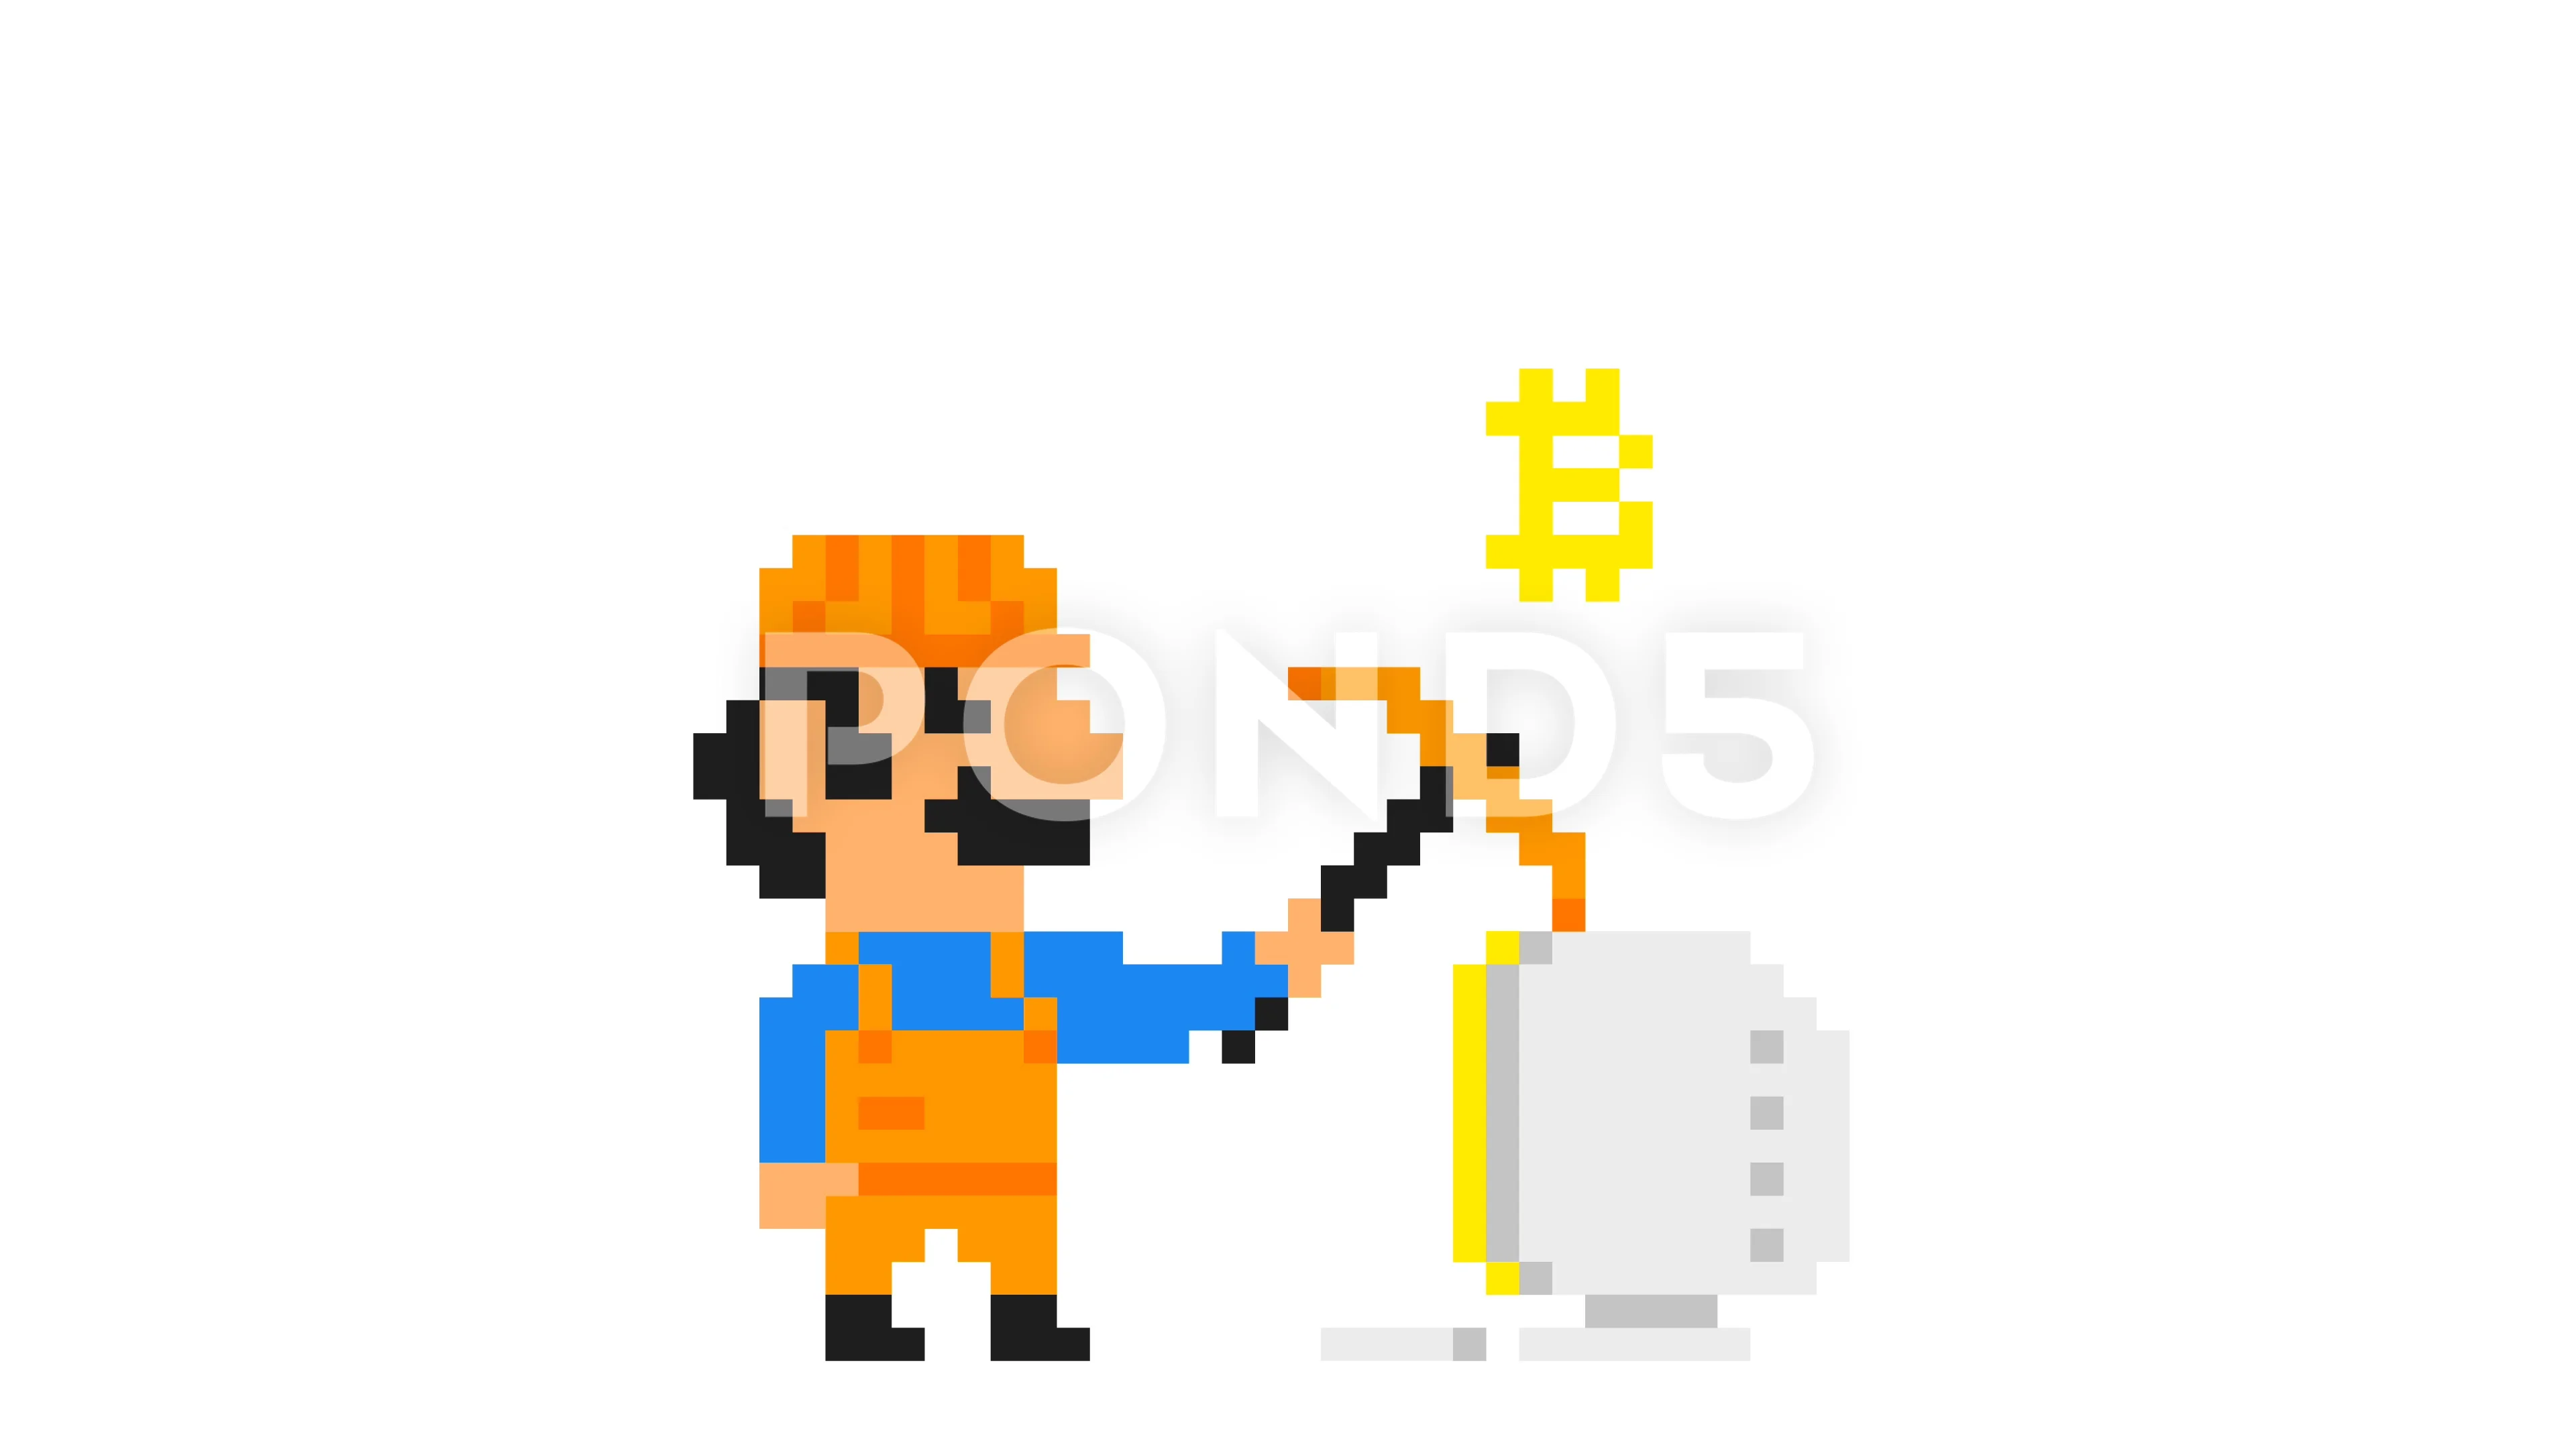 Bitcoin sign seamless pattern in pixel art style. 8-bit Bitcoin